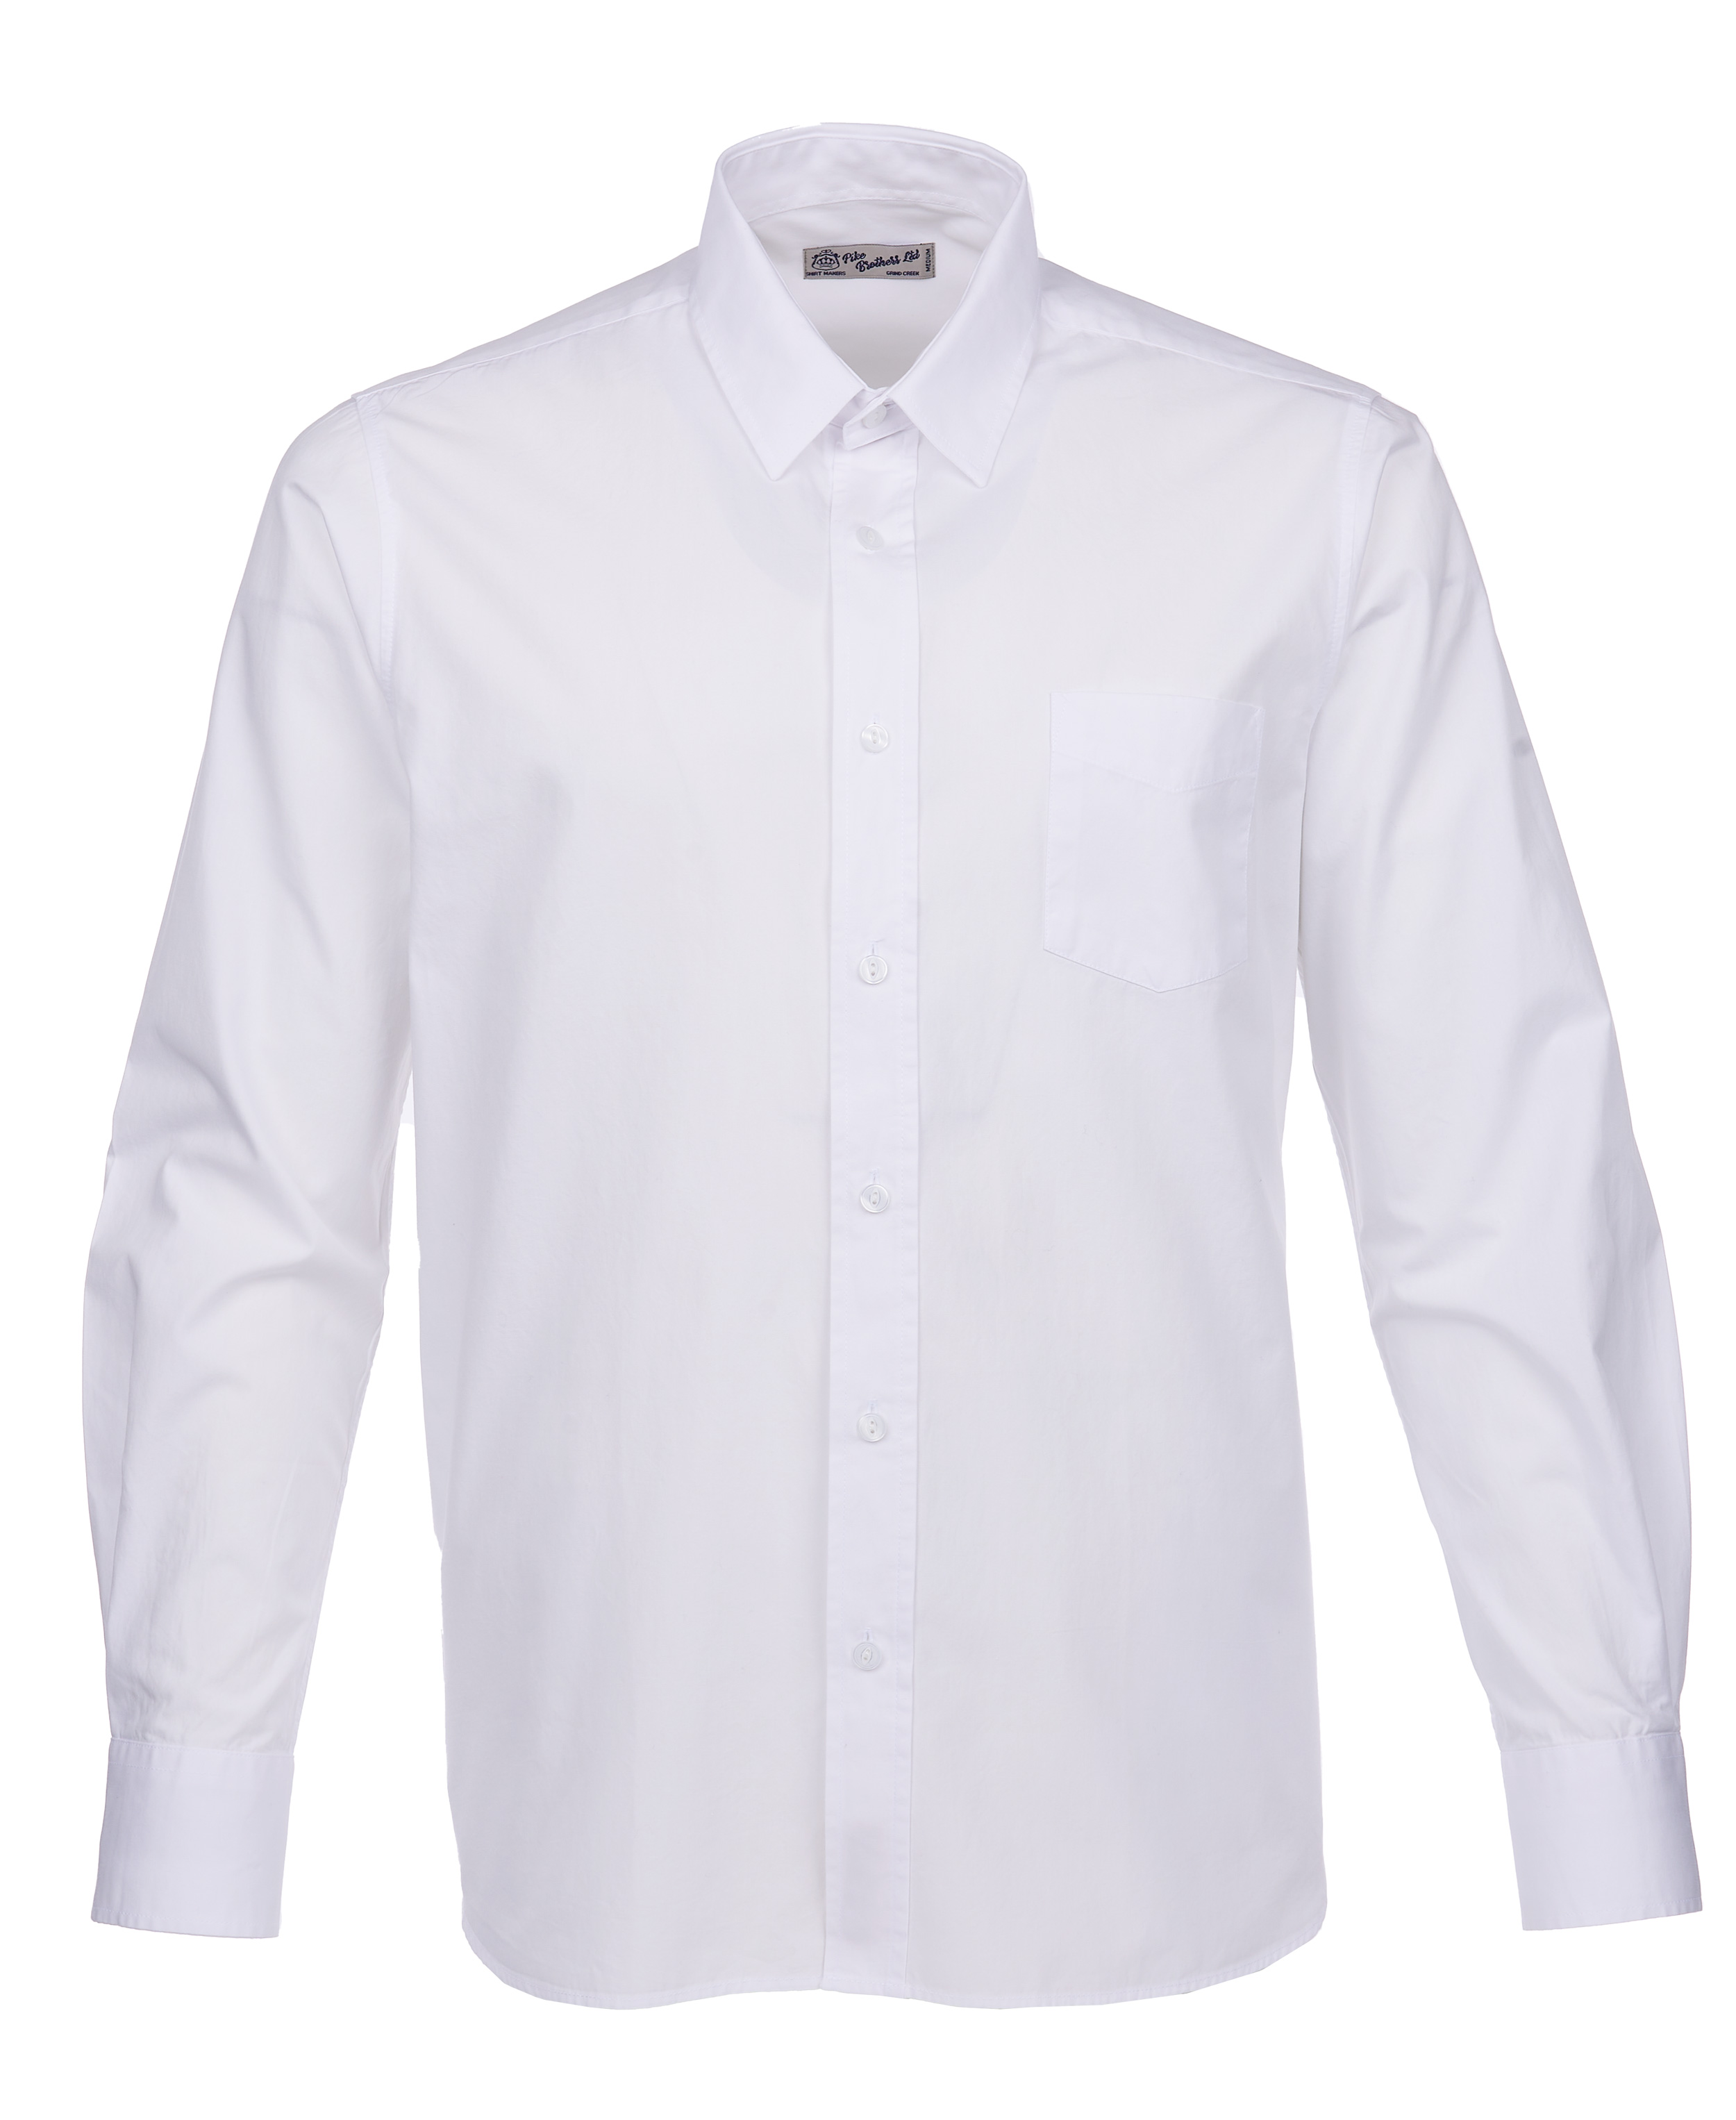 1947 Albatros Shirt plain white